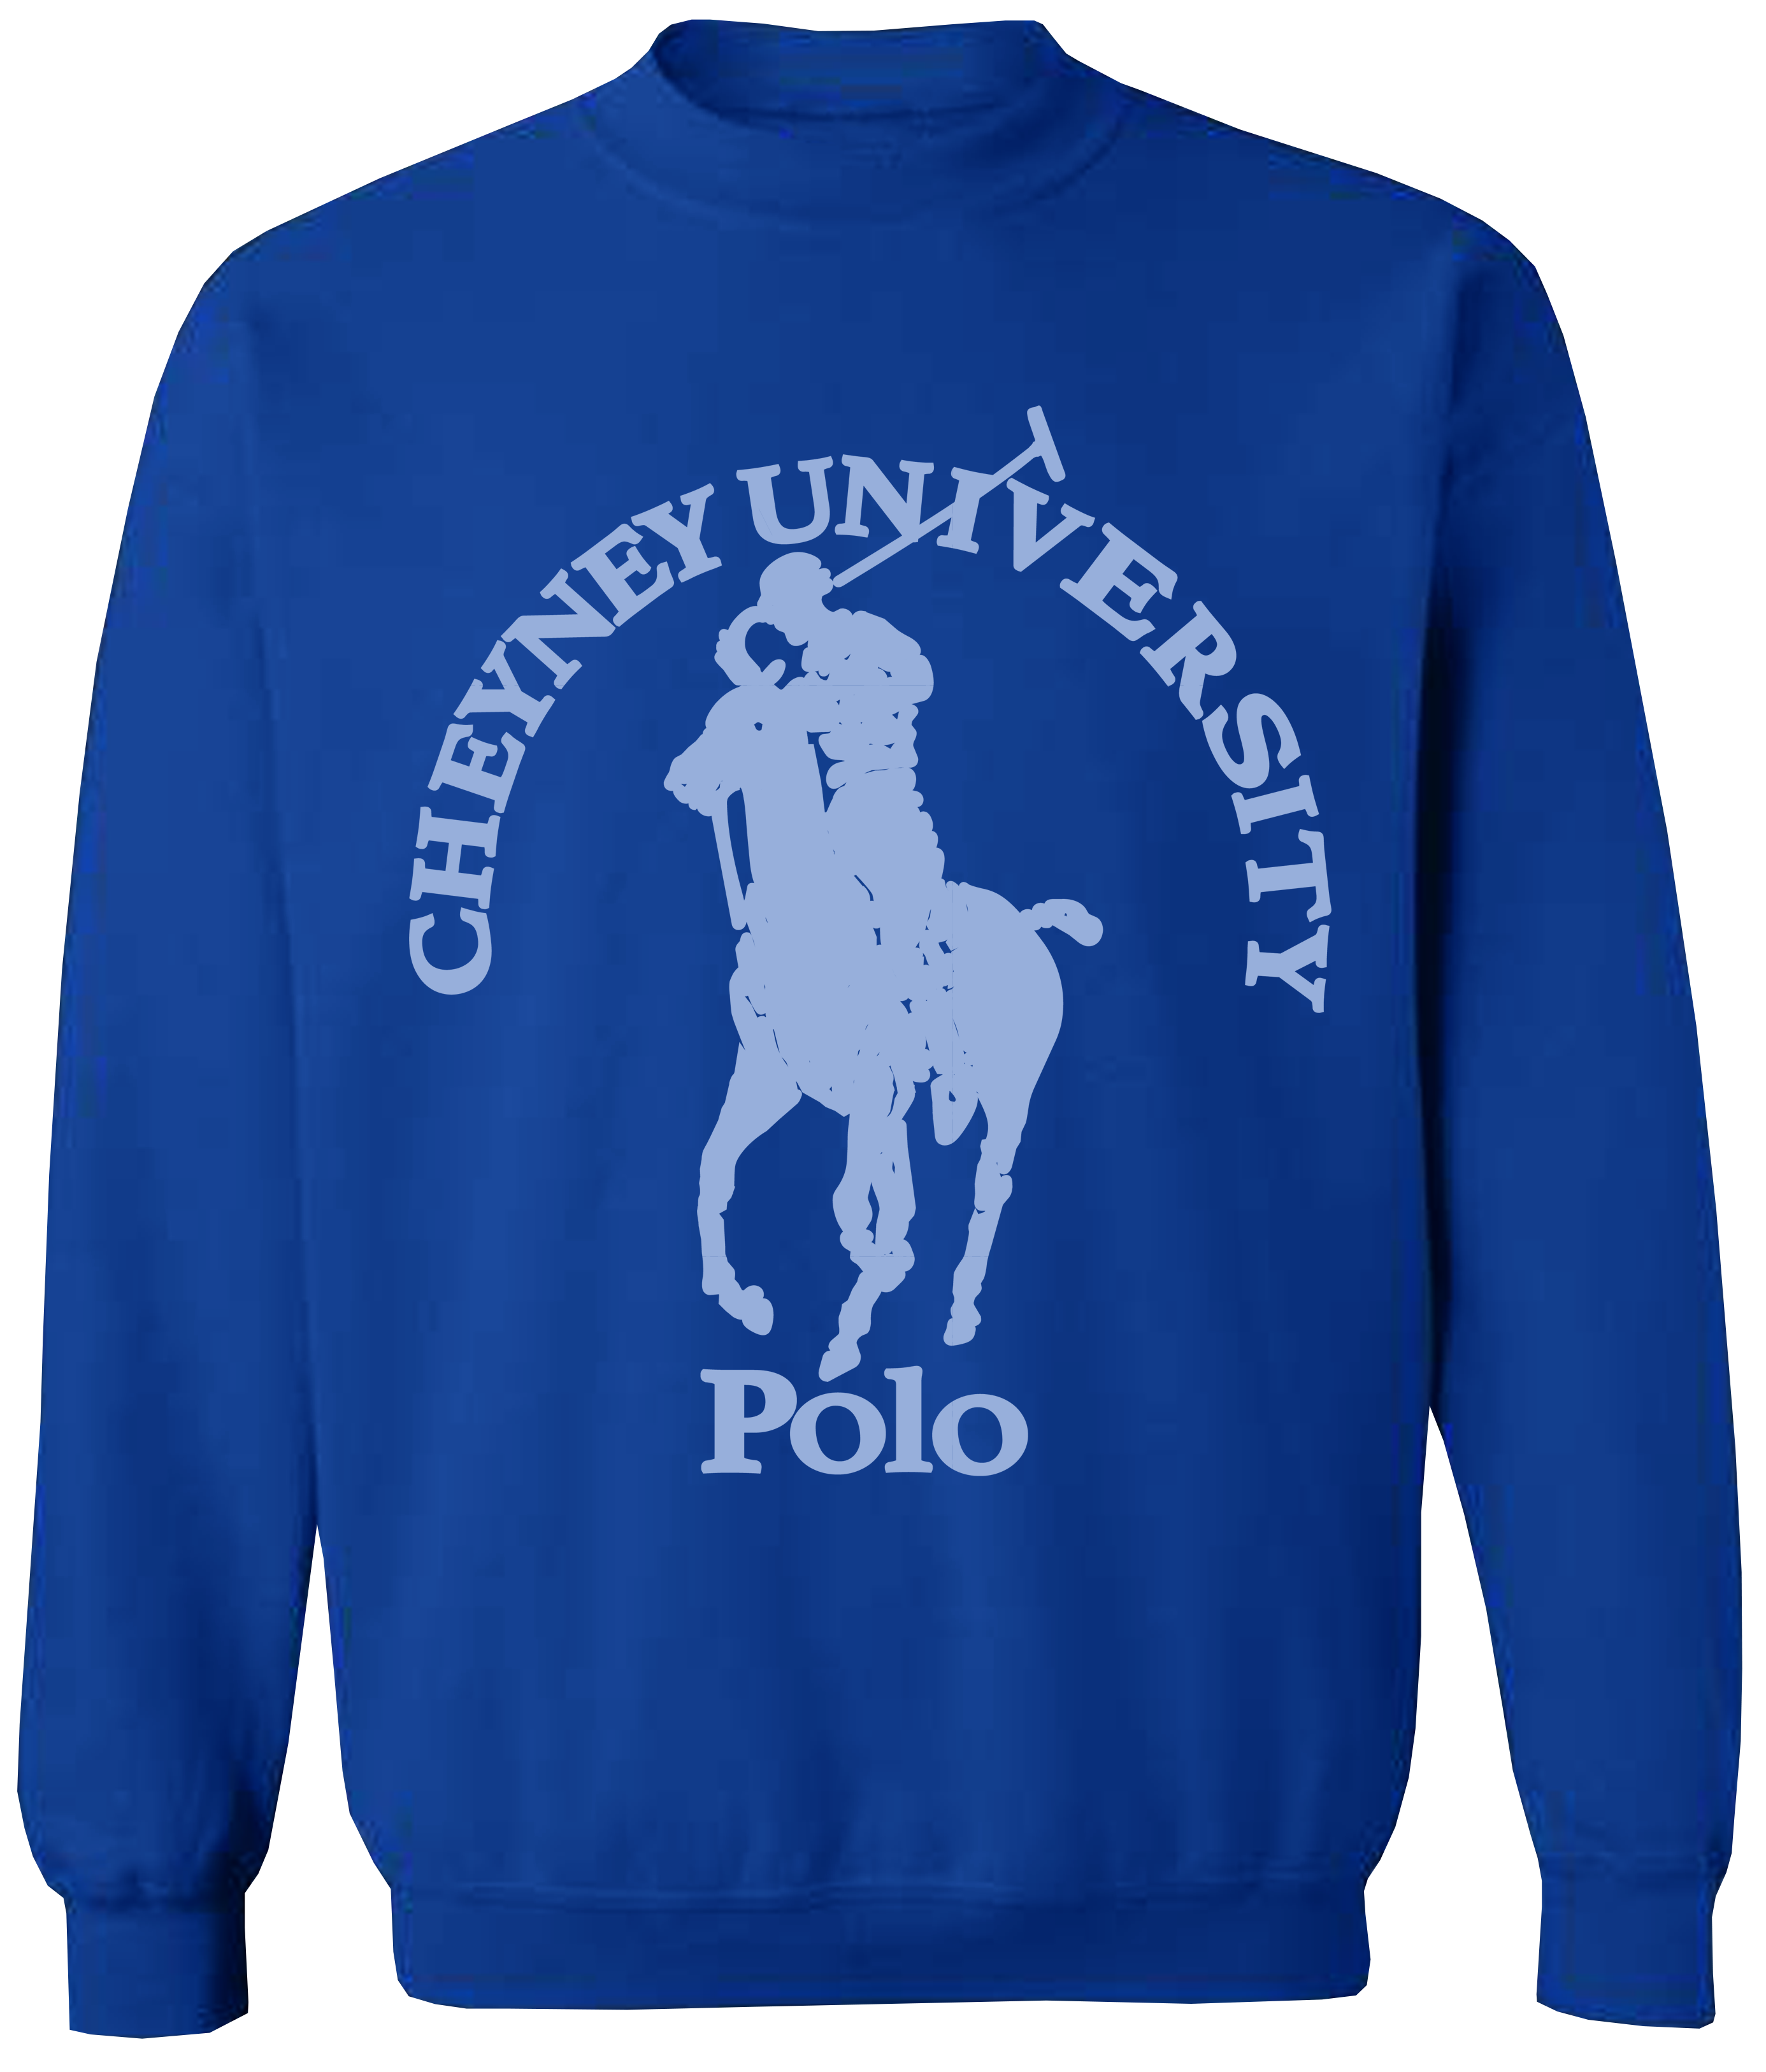 HBCU Polo Crewneck Sweatshirt - Cheyney